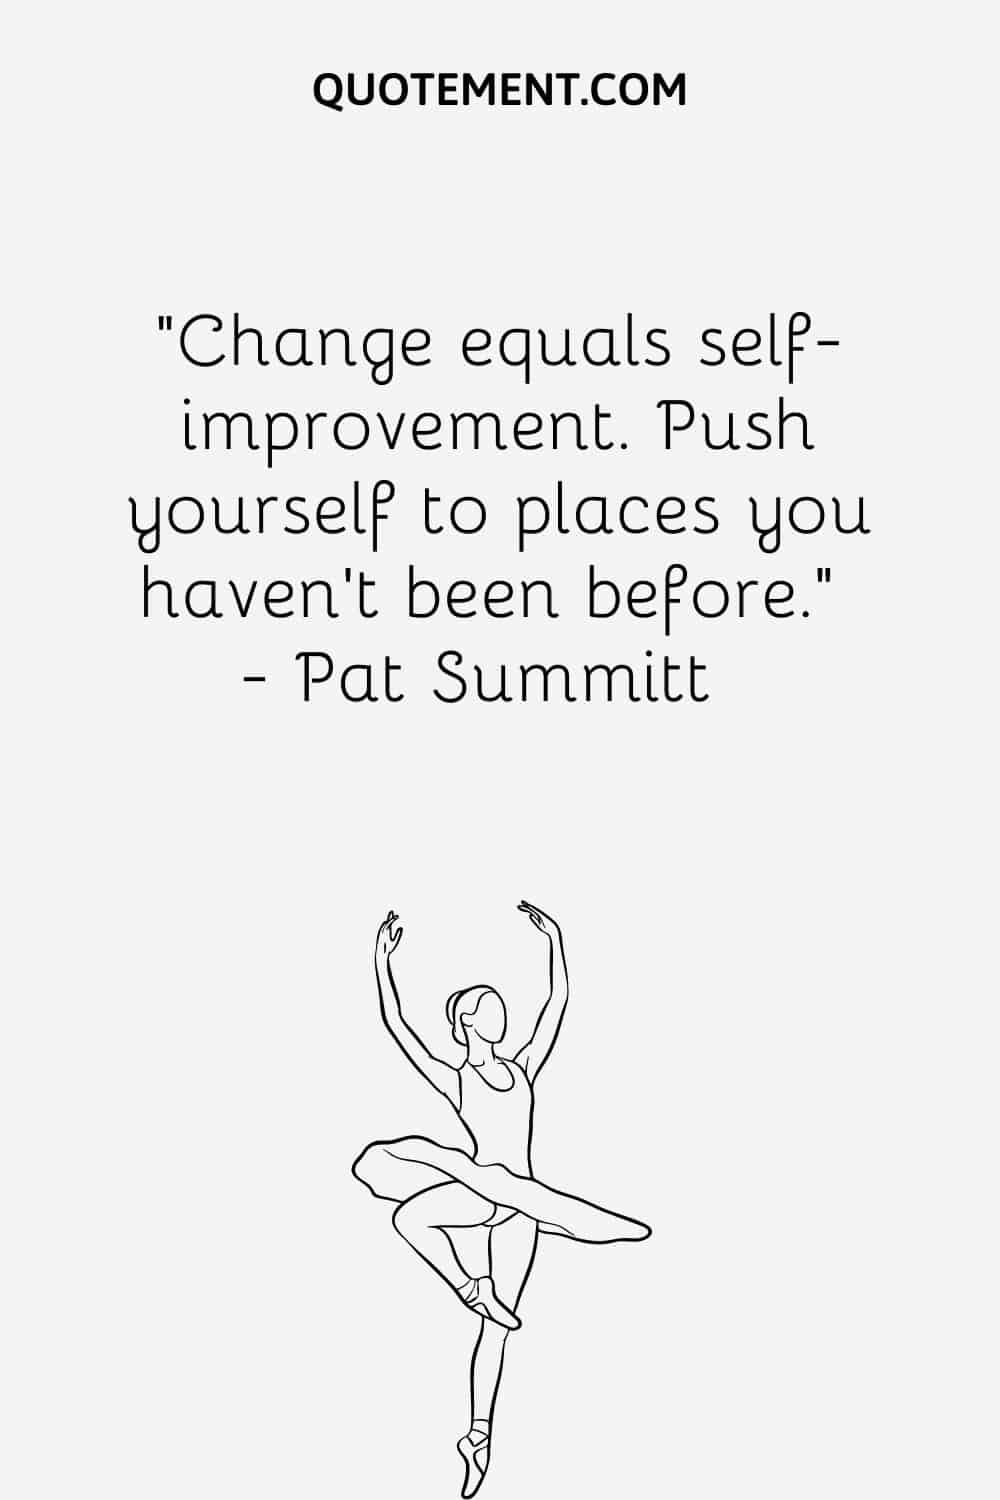 Change equals self-improvement.